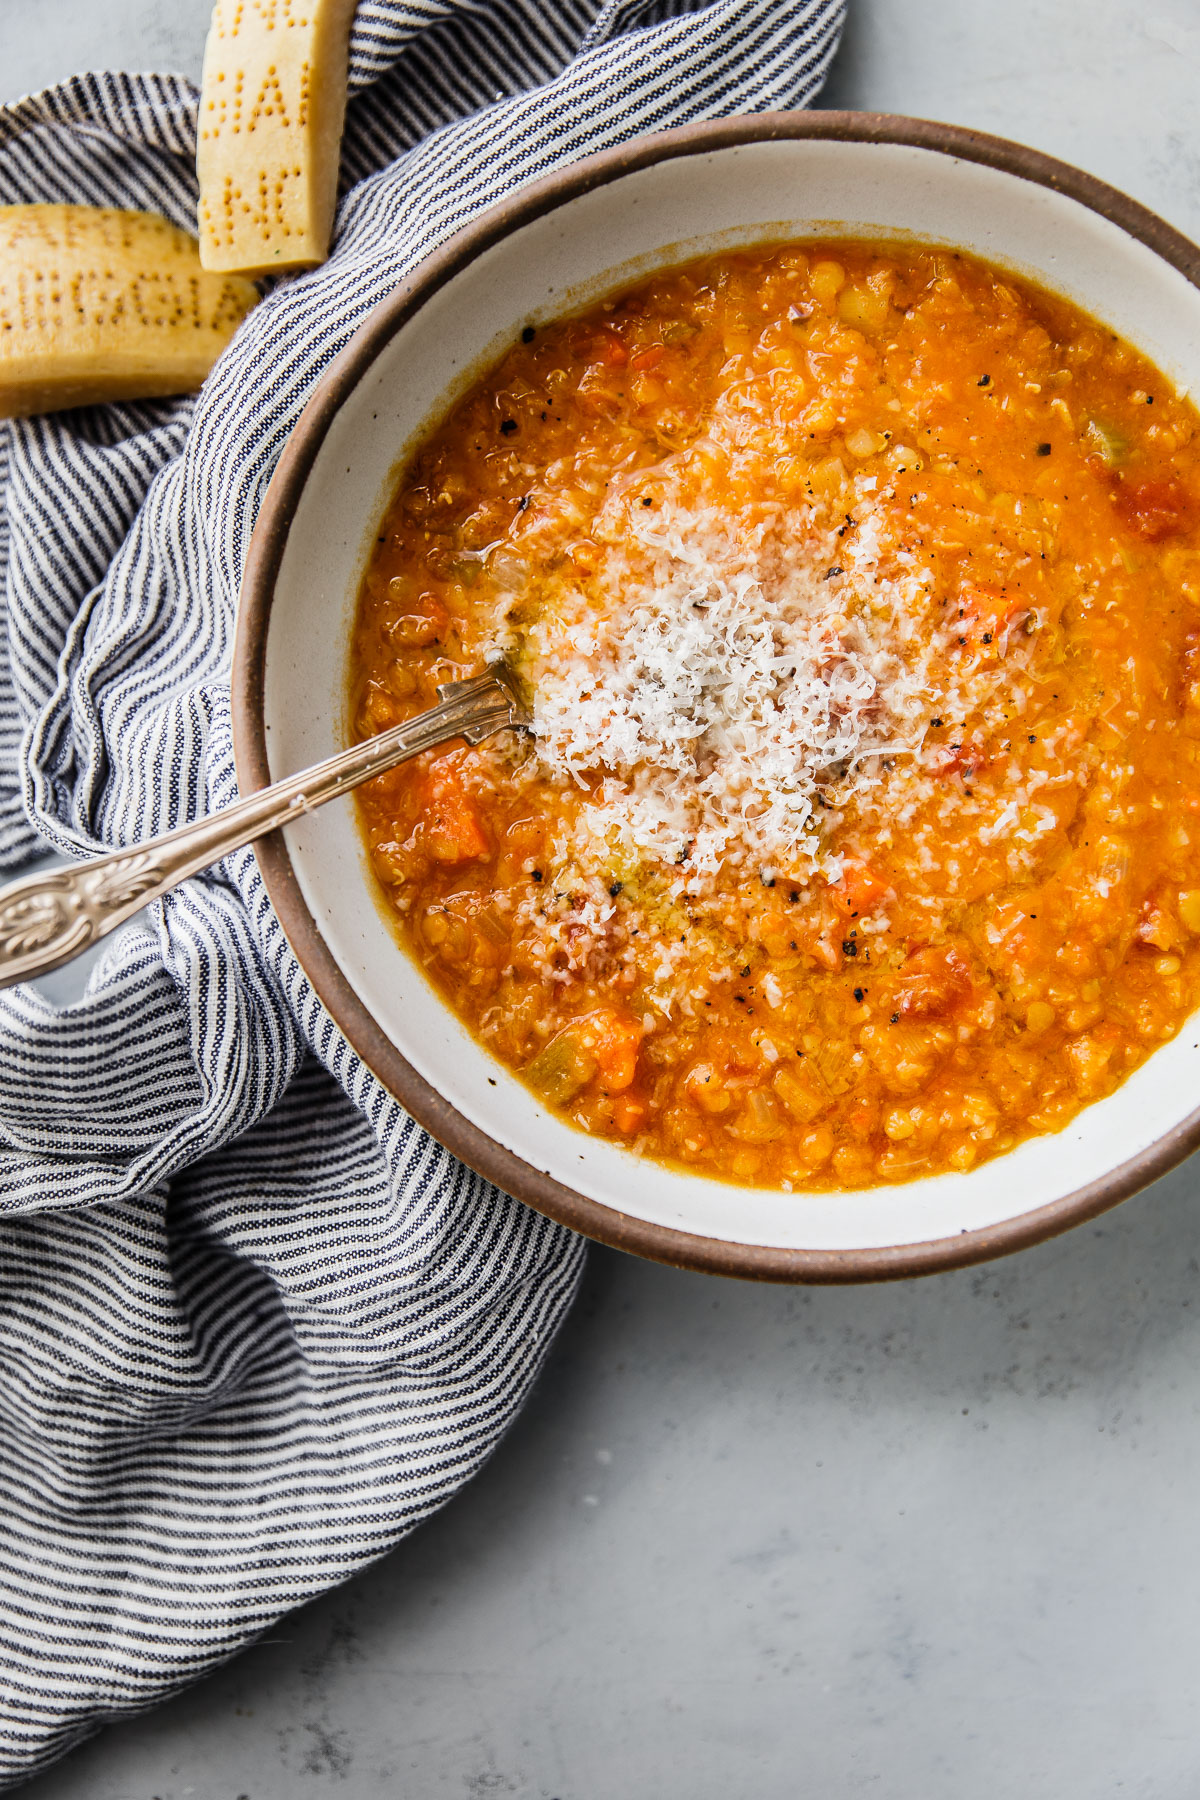 https://www.abeautifulplate.com/wp-content/uploads/2019/01/red-lentil-soup-1-5-1.jpg